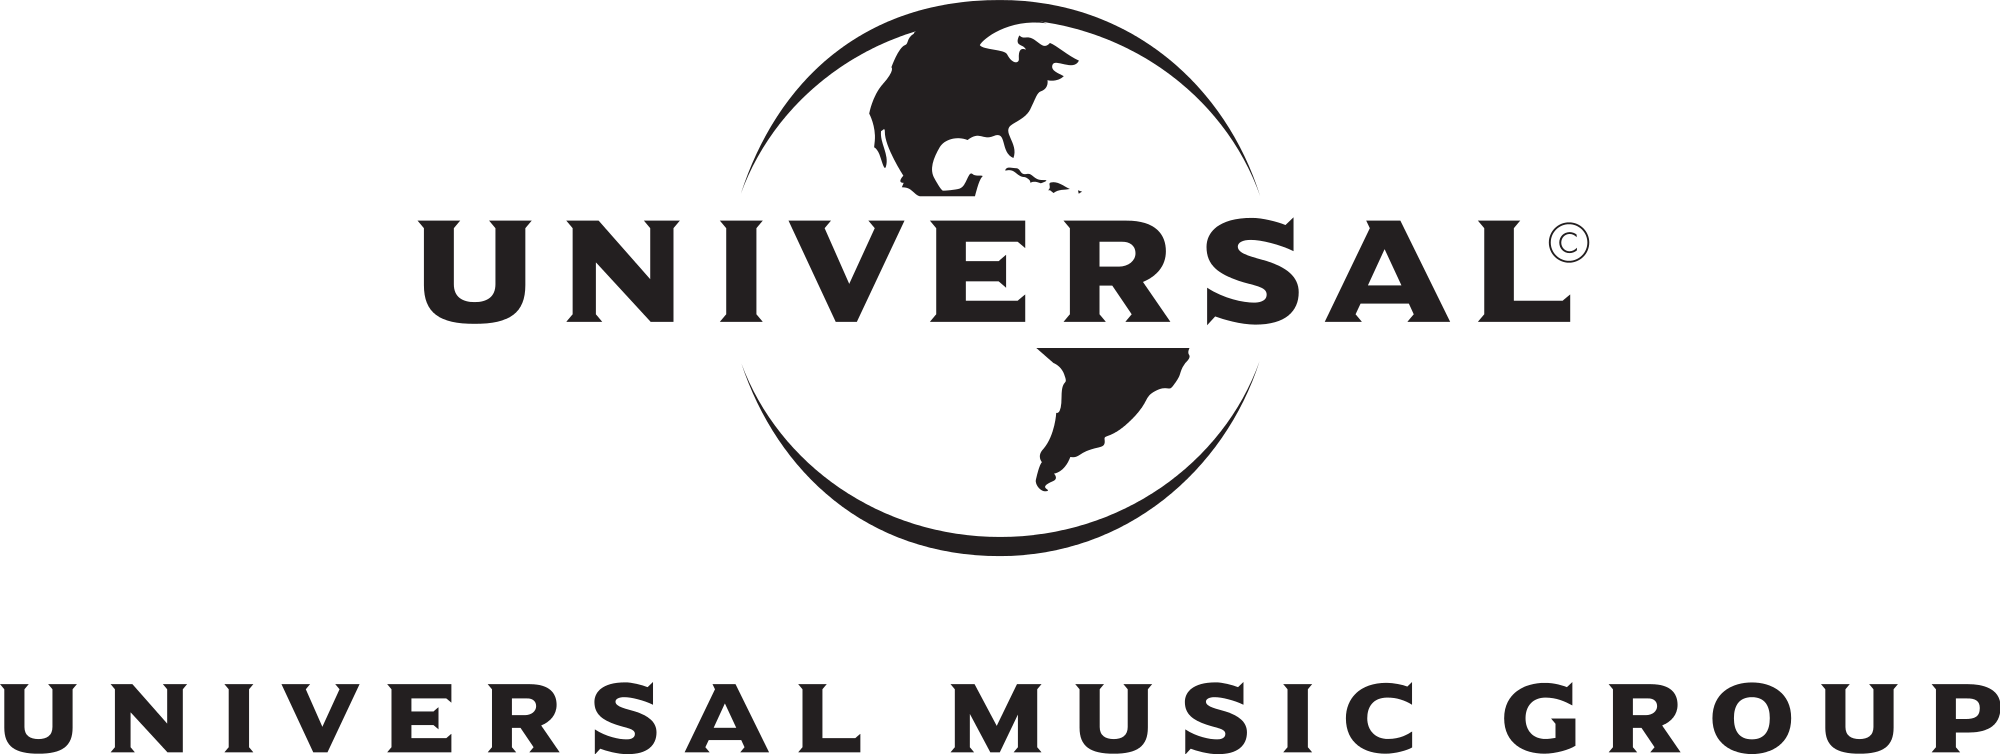 Universal 2017 Logo - universal-music-group-logo - That Eric Alper